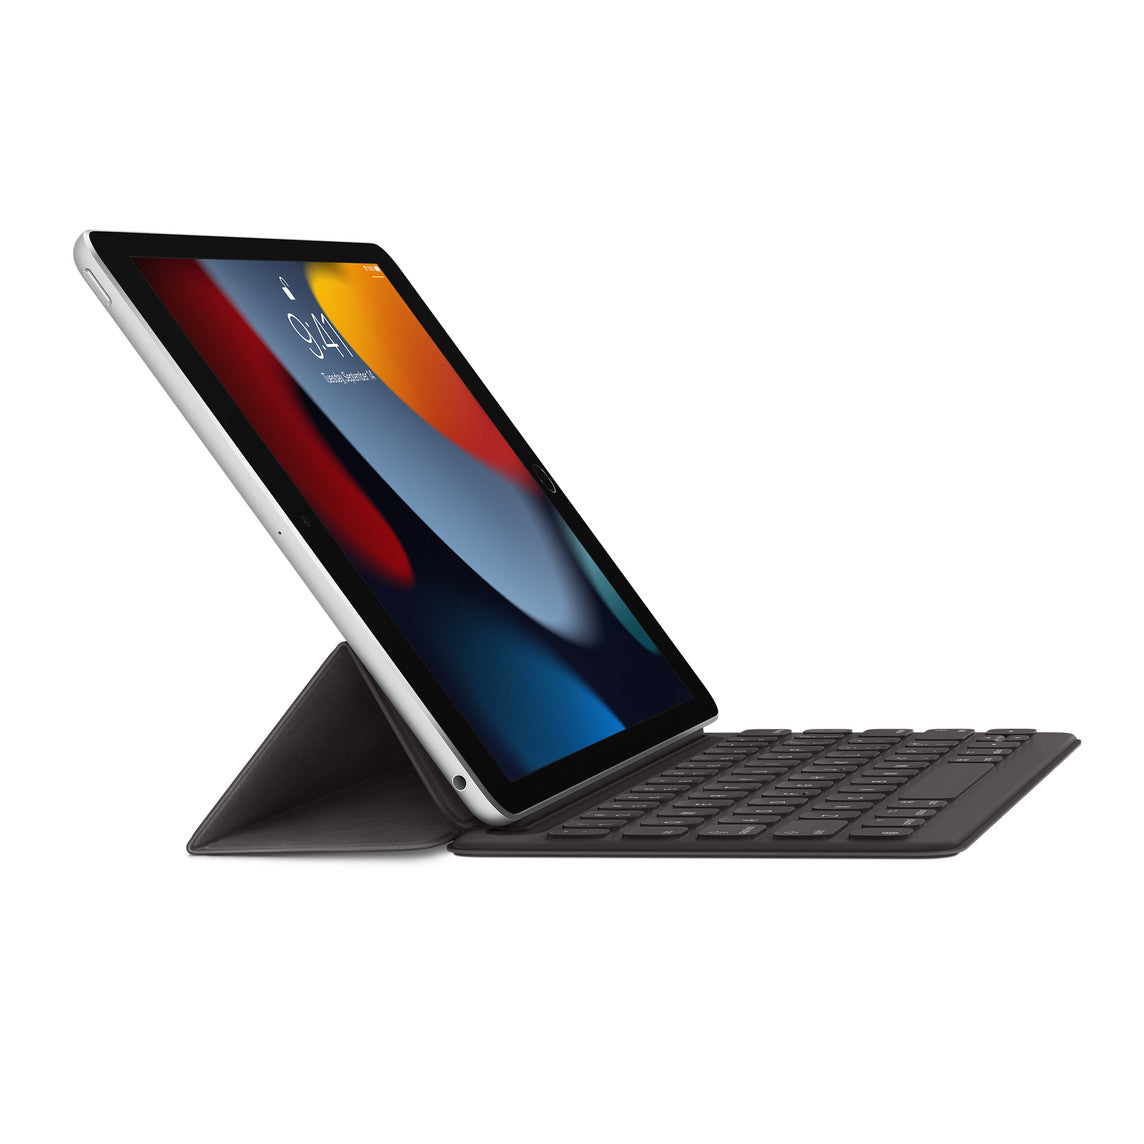 Smart Keyboard for iPad (9th generation) - US English